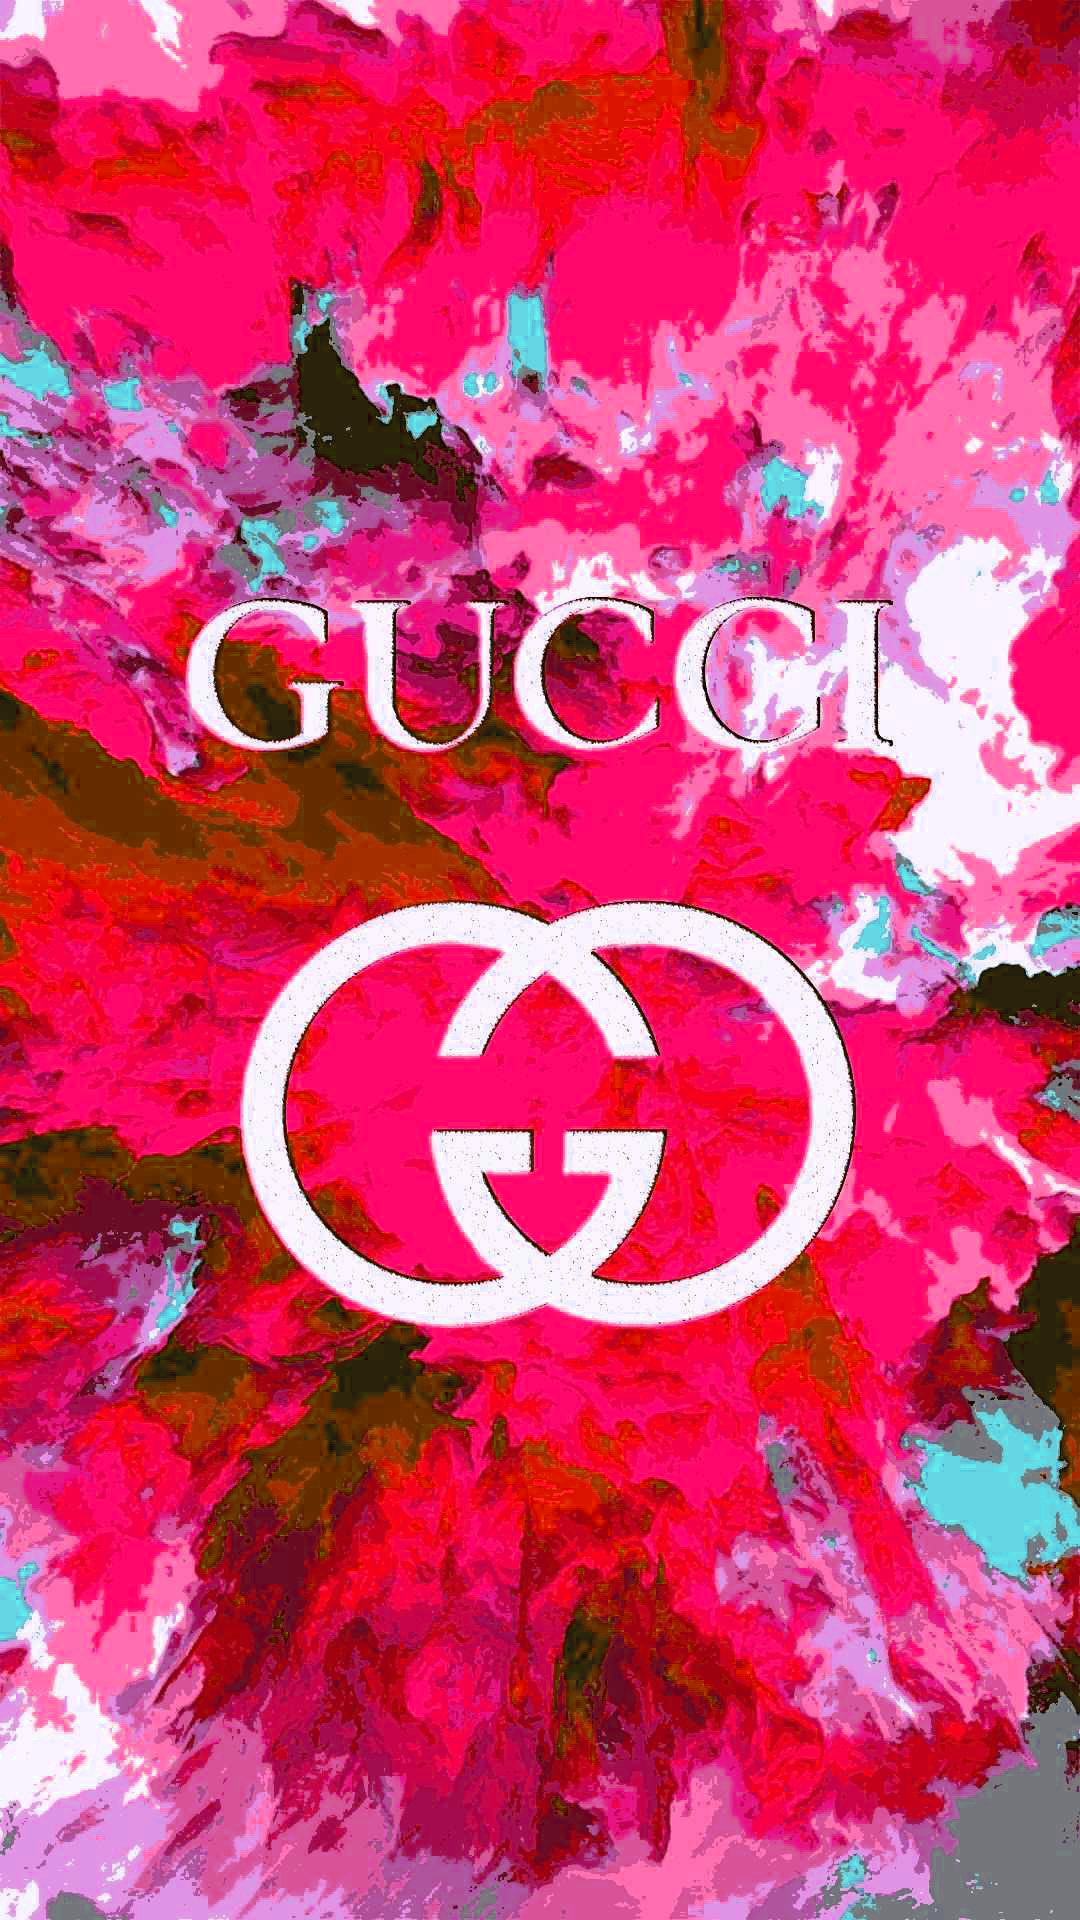 Gucci HD Wallpapers Free download  PixelsTalkNet